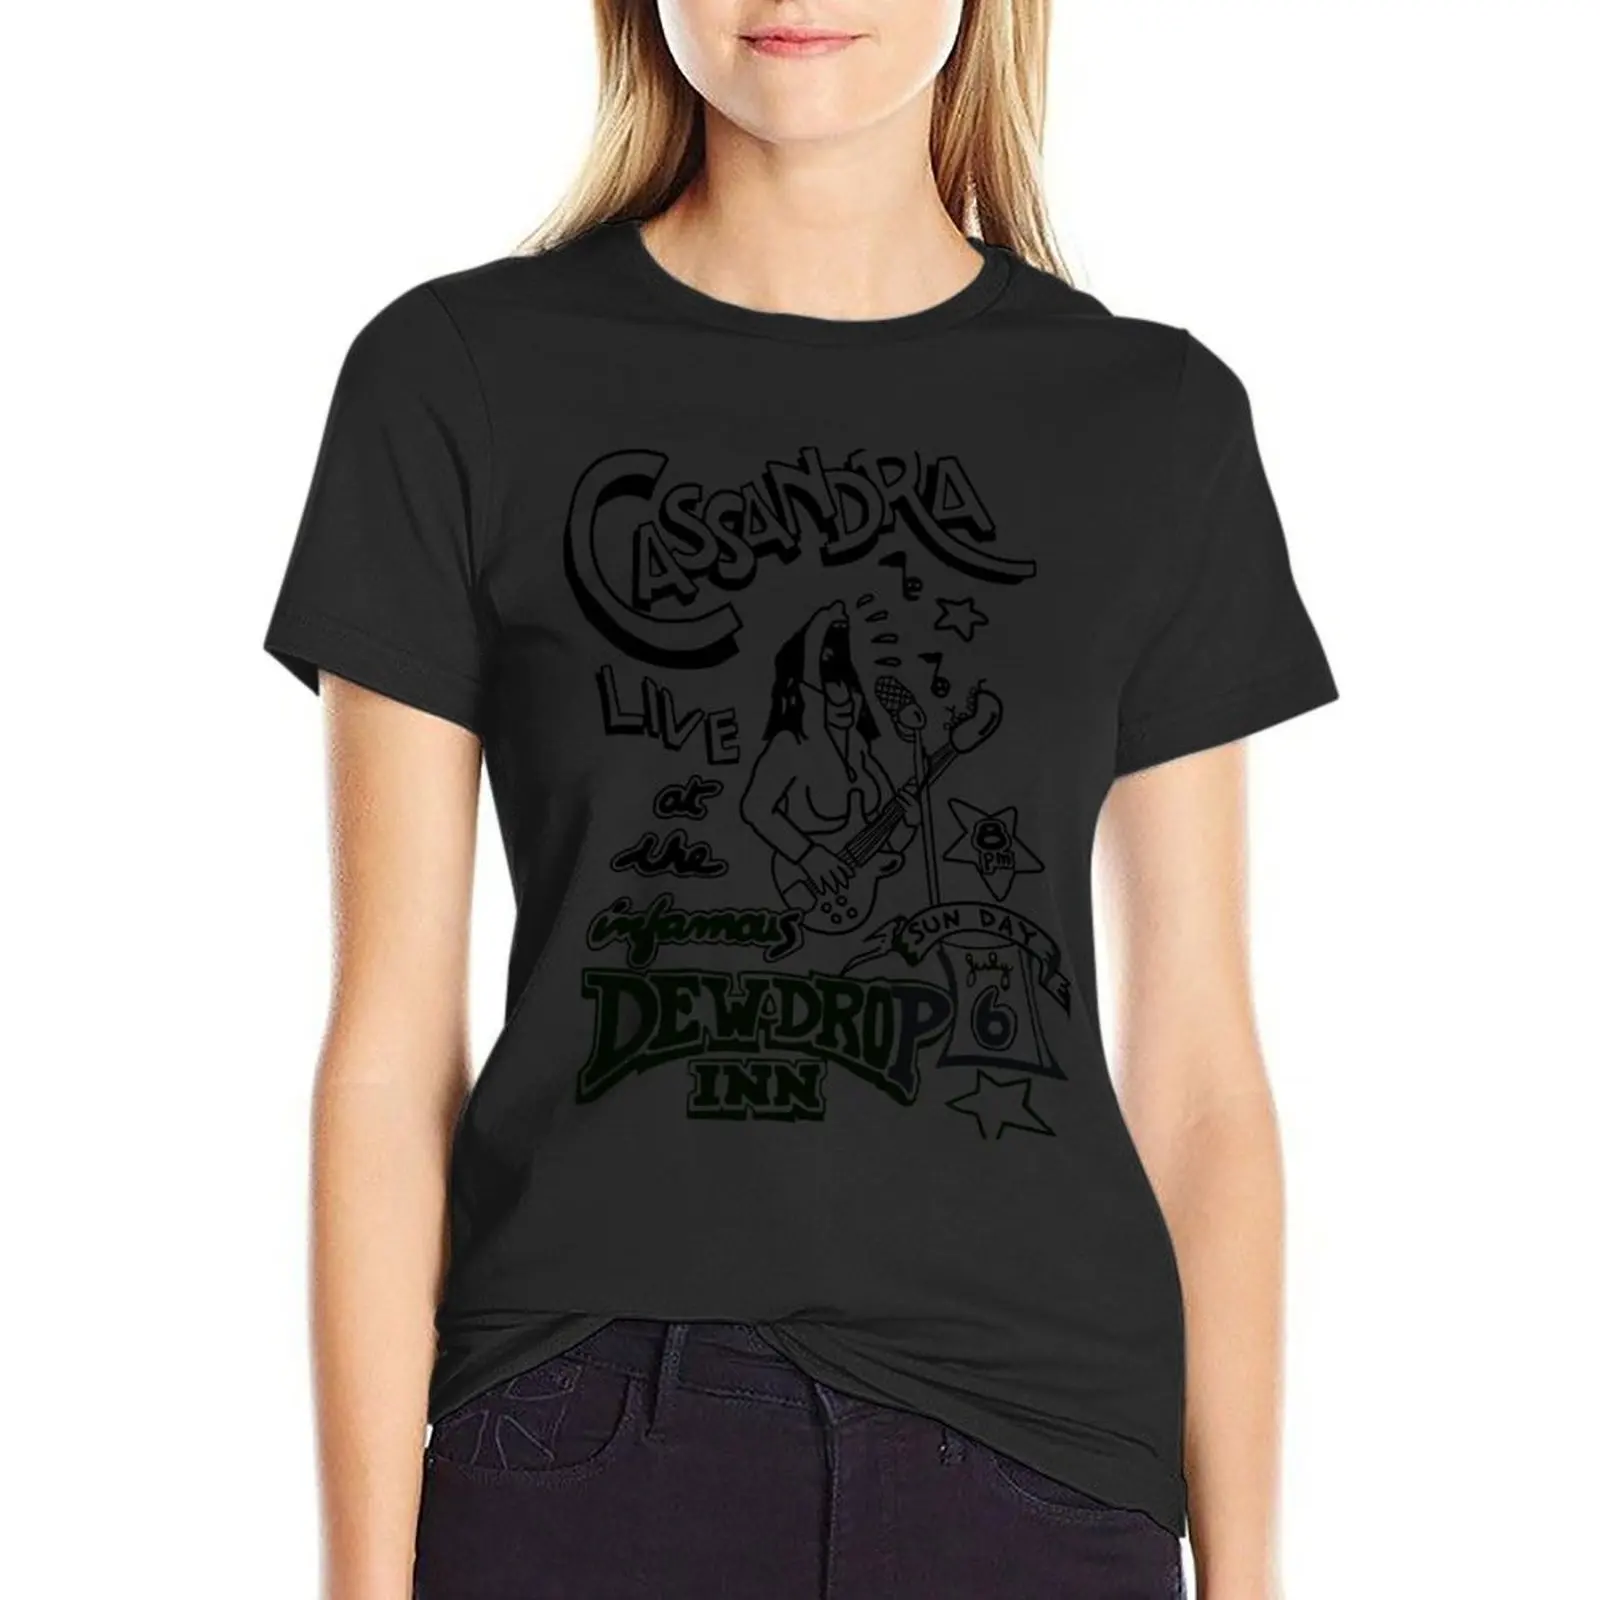 

Dew Drop Inn T-Shirt animal print shirt for girls shirts graphic tees summer clothes hippie clothes Women clothing